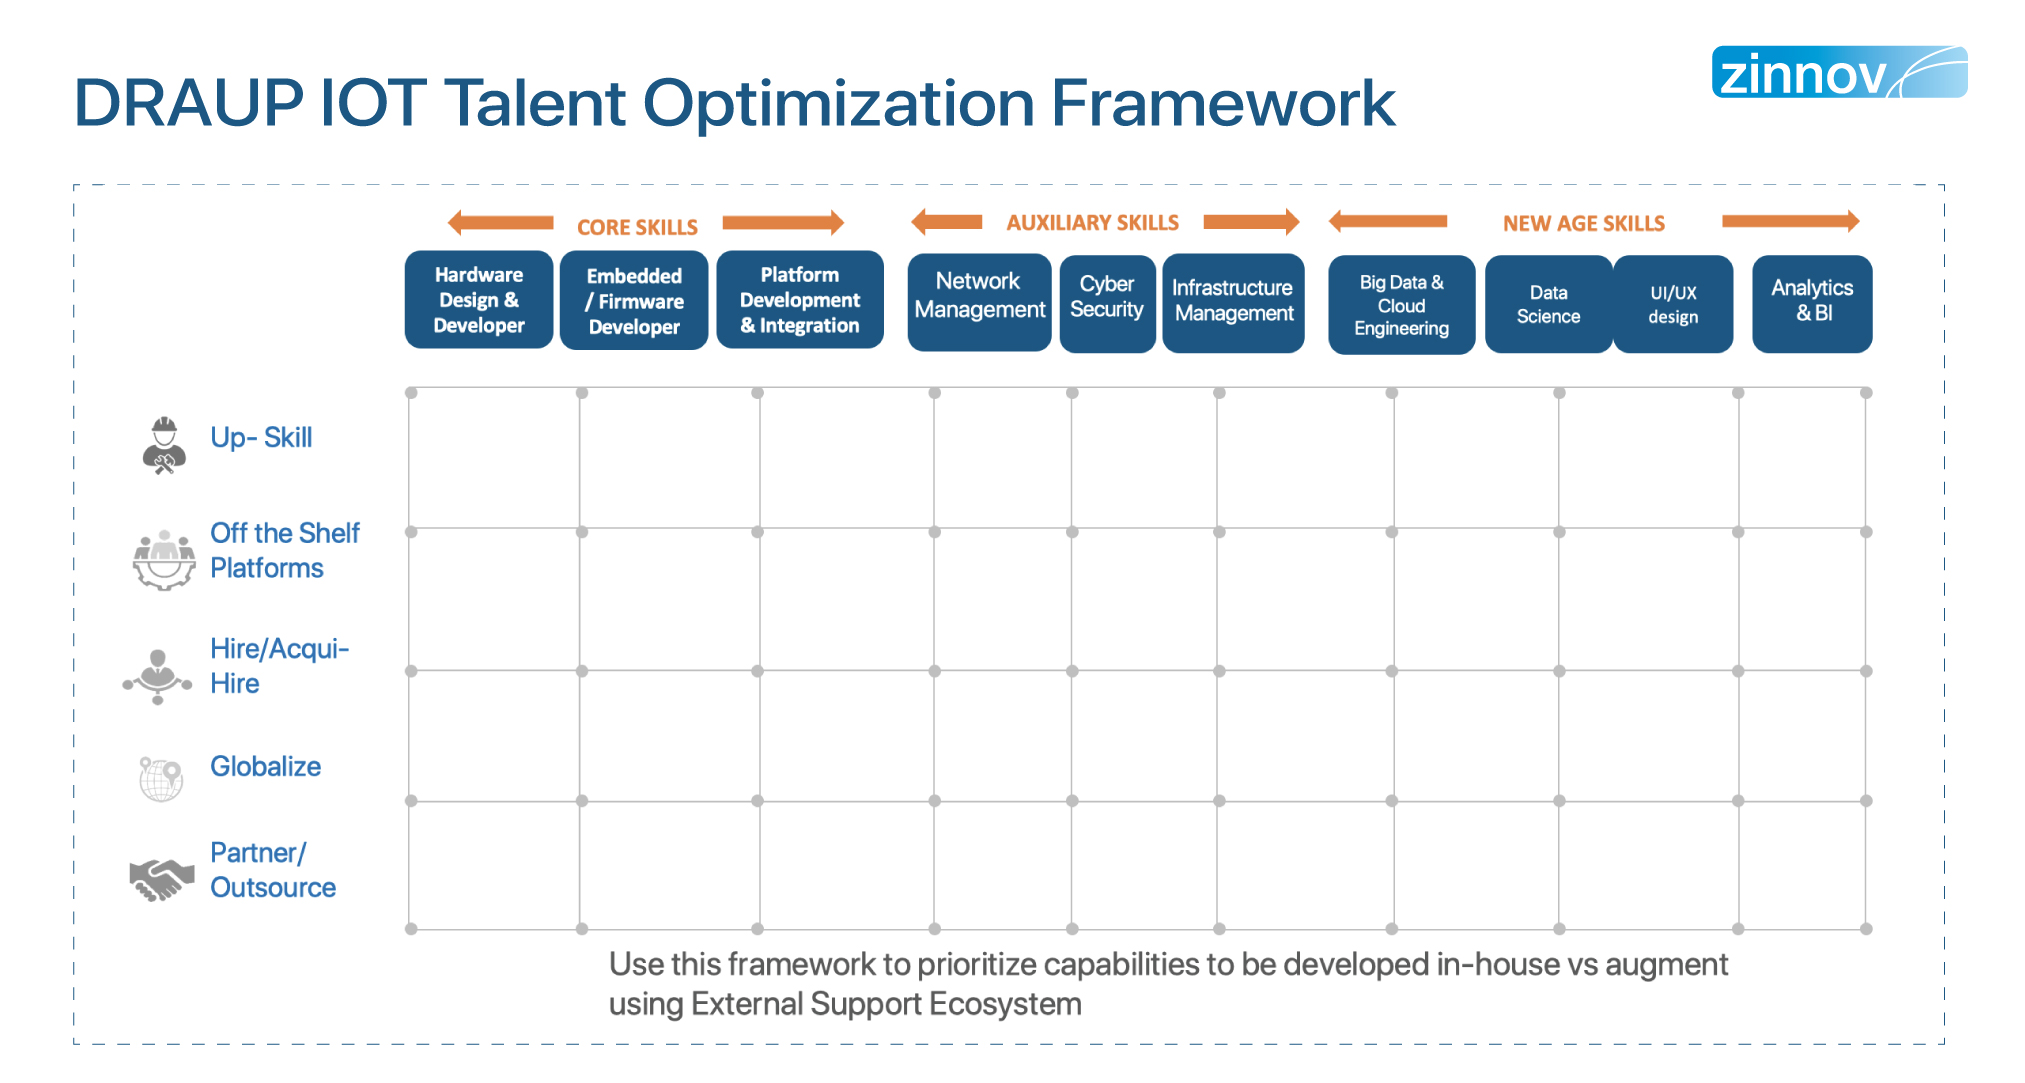 Draup IoT talent optimization framework